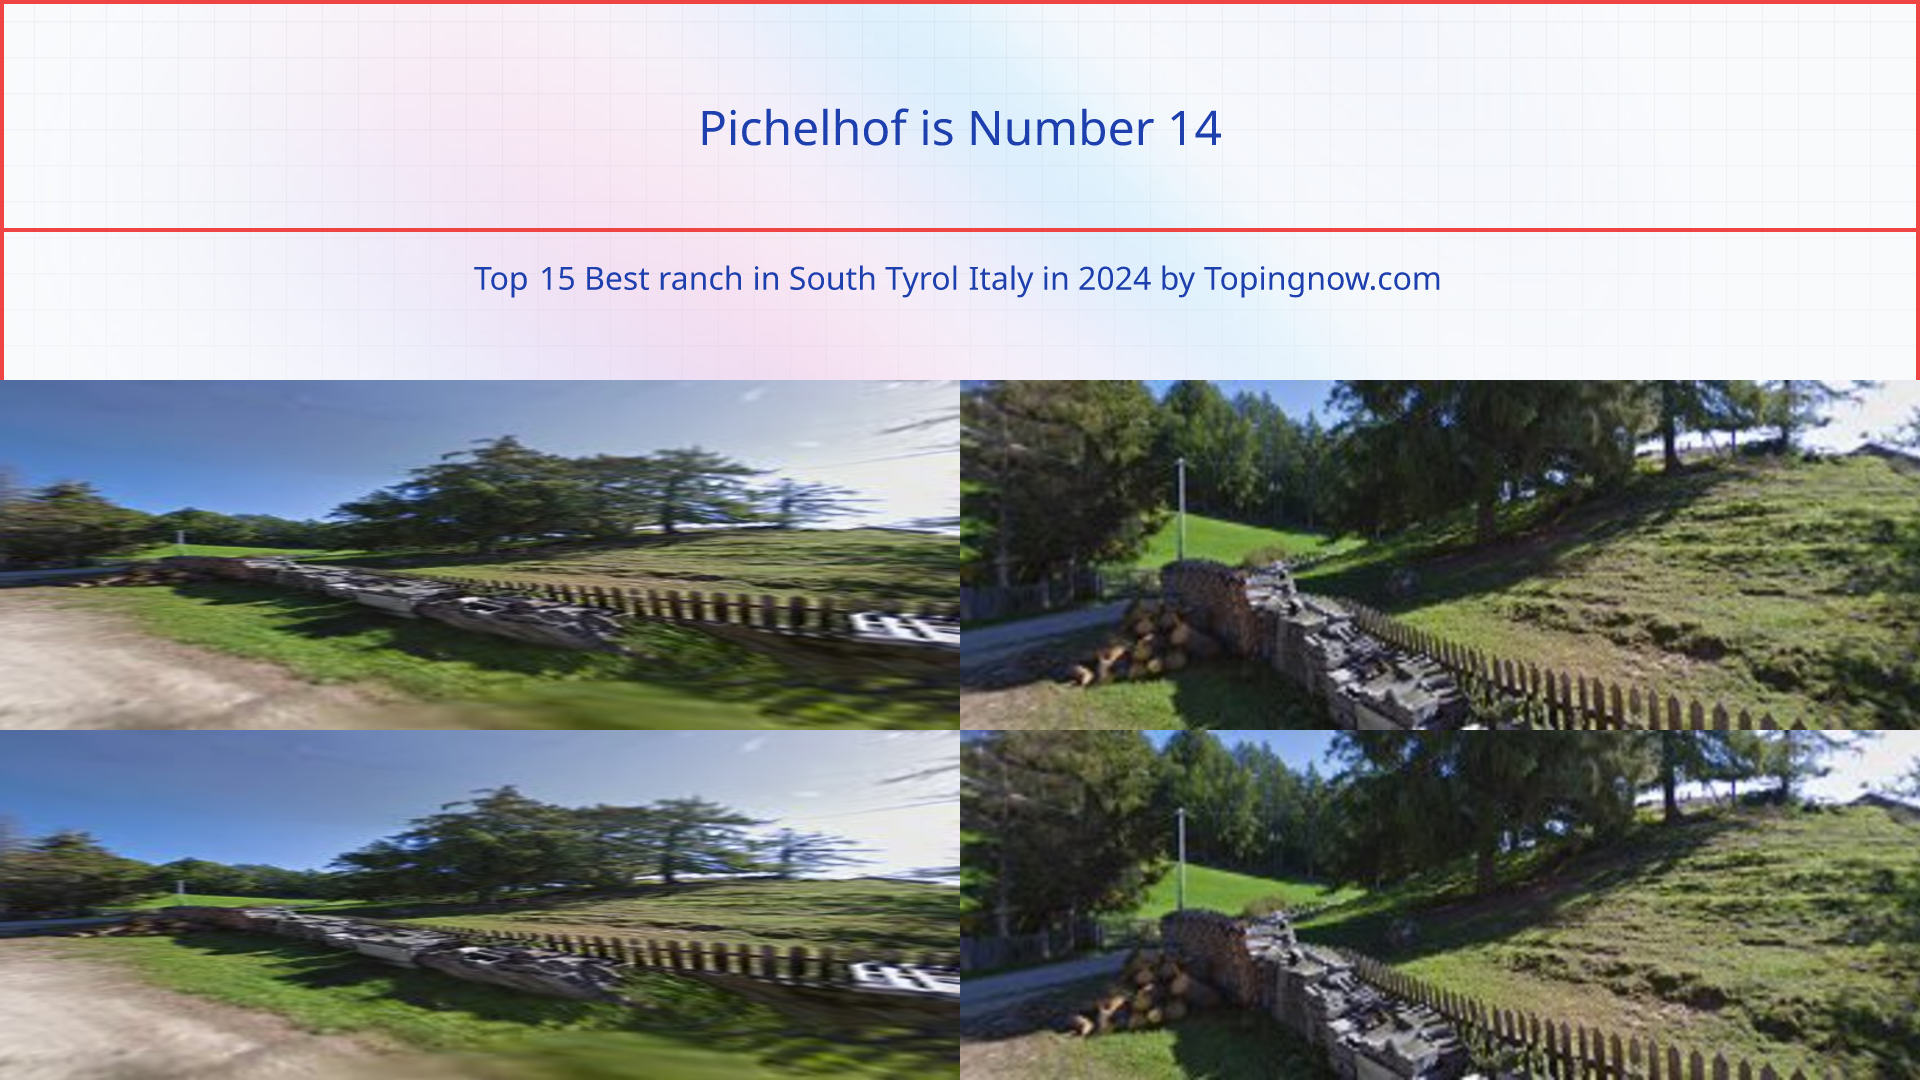 Pichelhof: Top 15 Best ranch in South Tyrol Italy in 2024